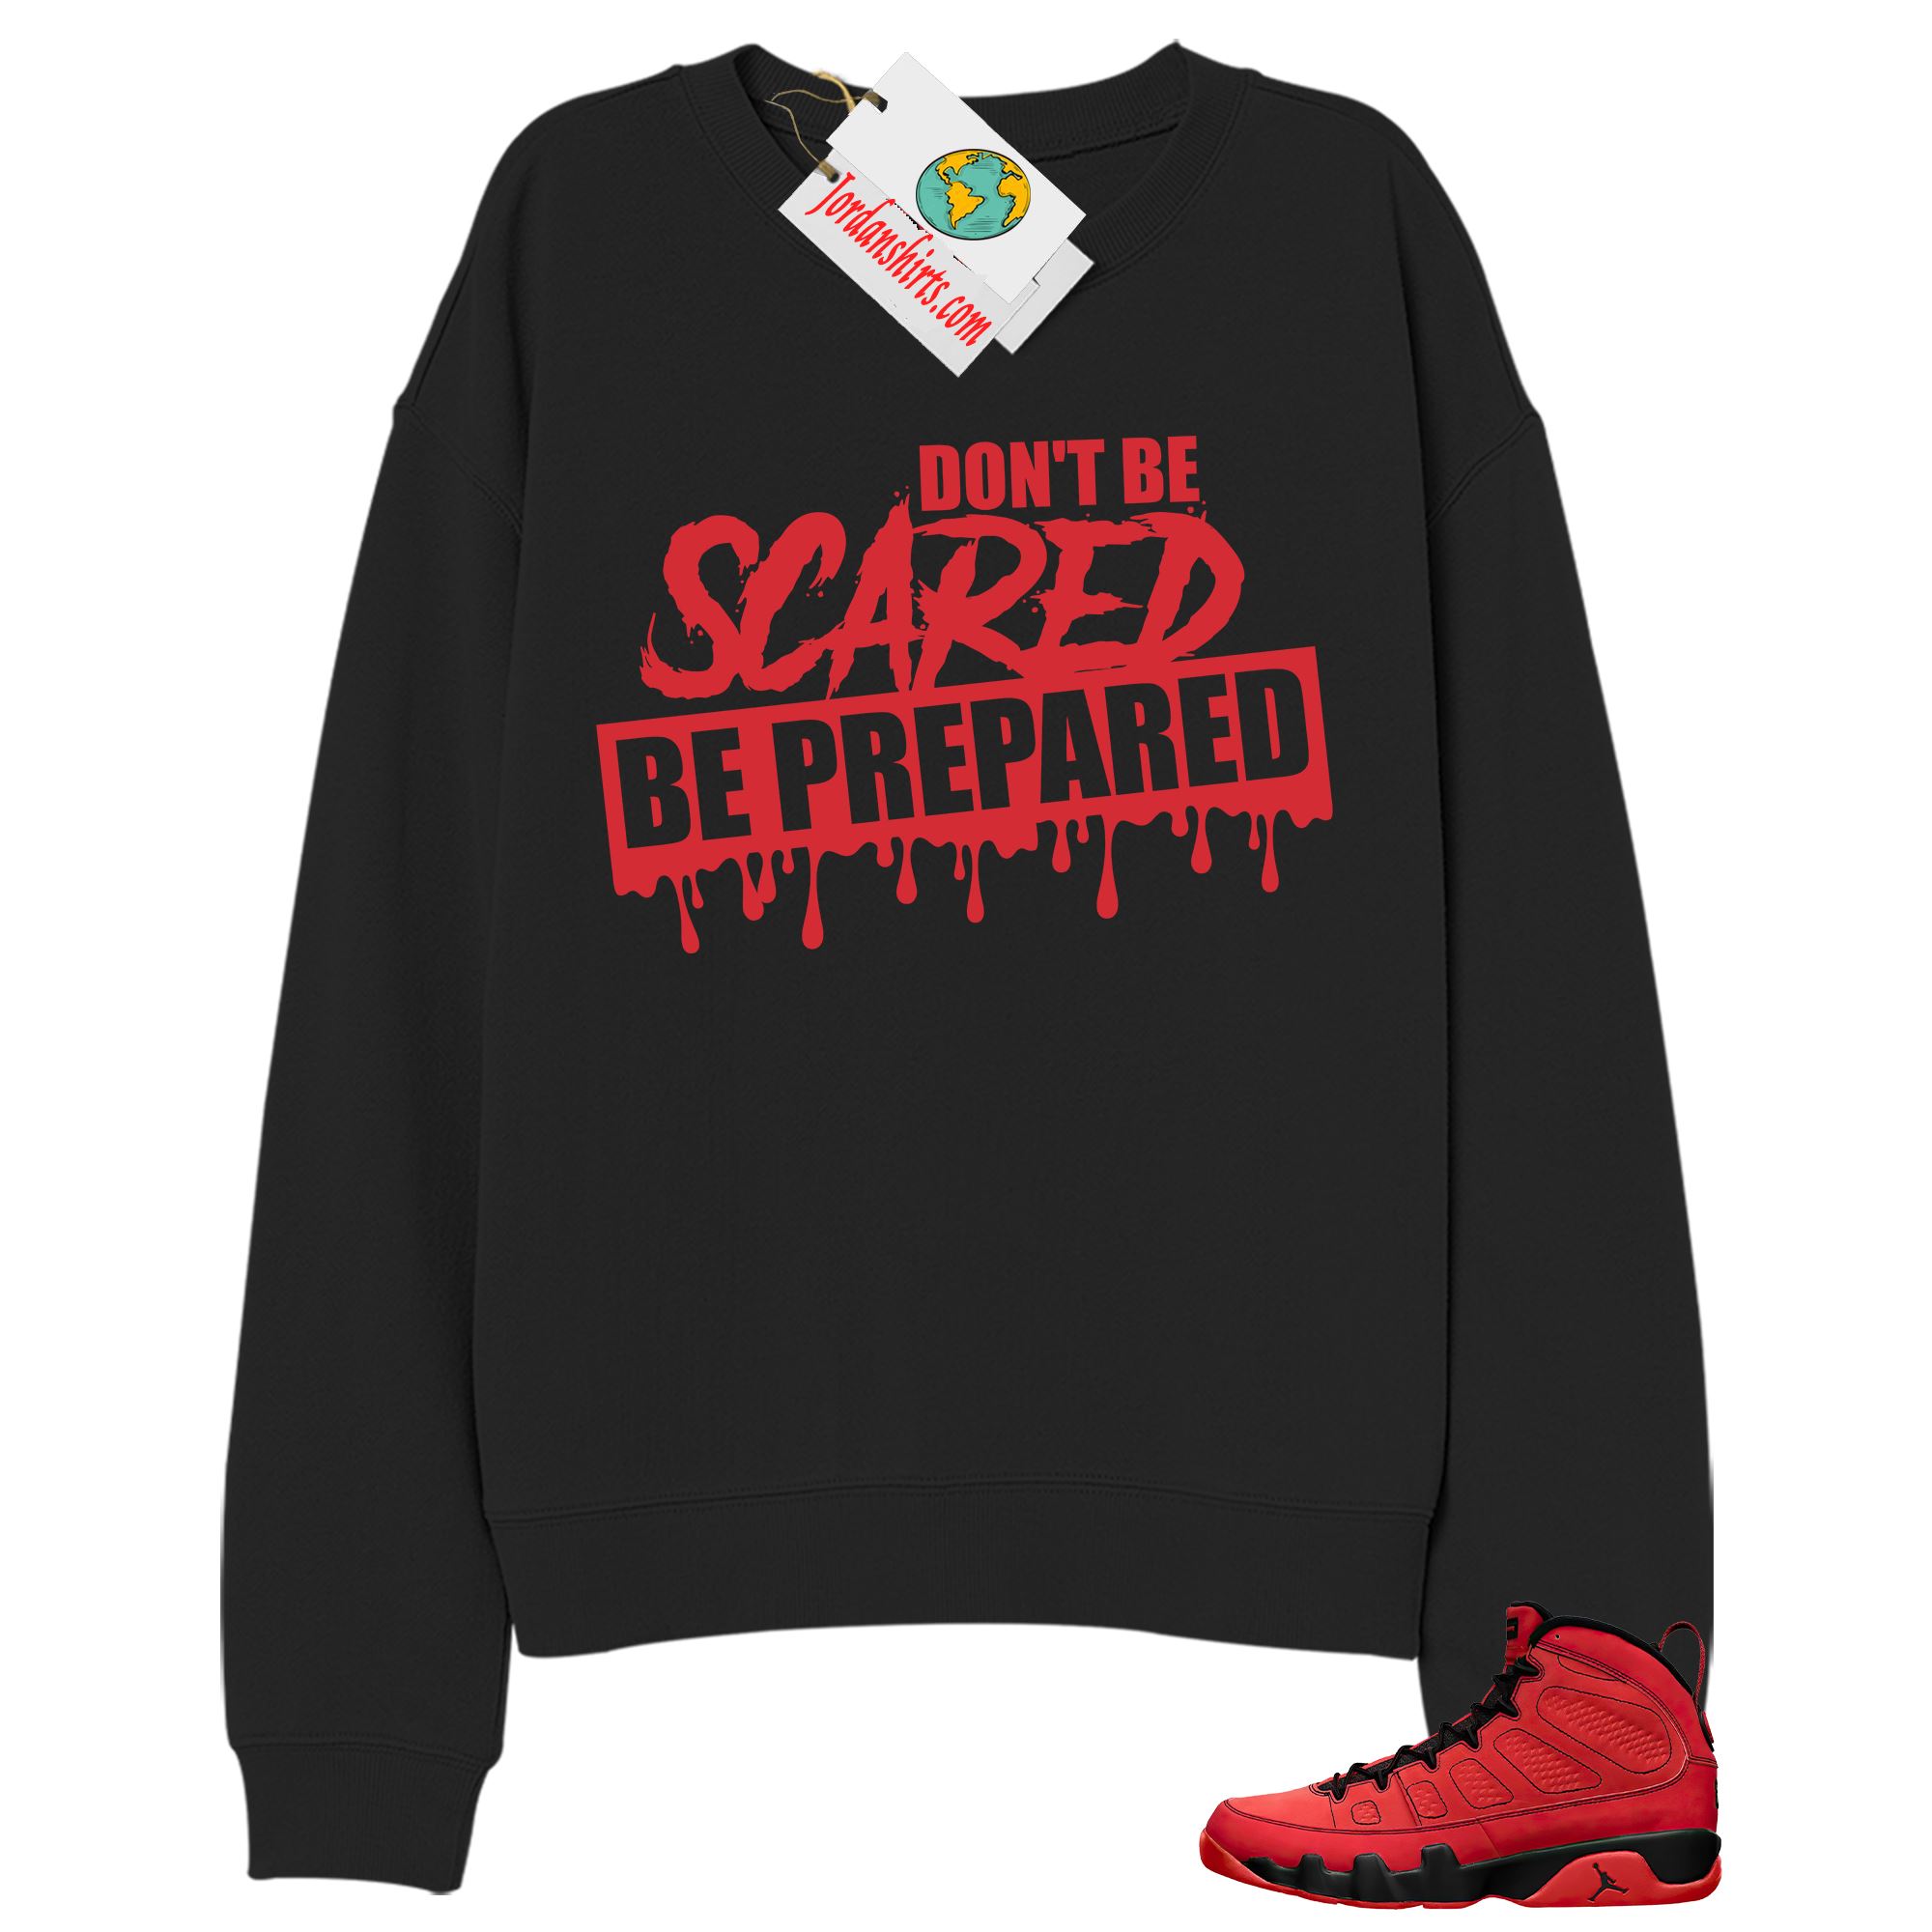 Jordan 9 Sweatshirt, Dont Be Scared Be Prepared Black Sweatshirt Air Jordan 9 Chile Red 9s Plus Size Up To 5xl